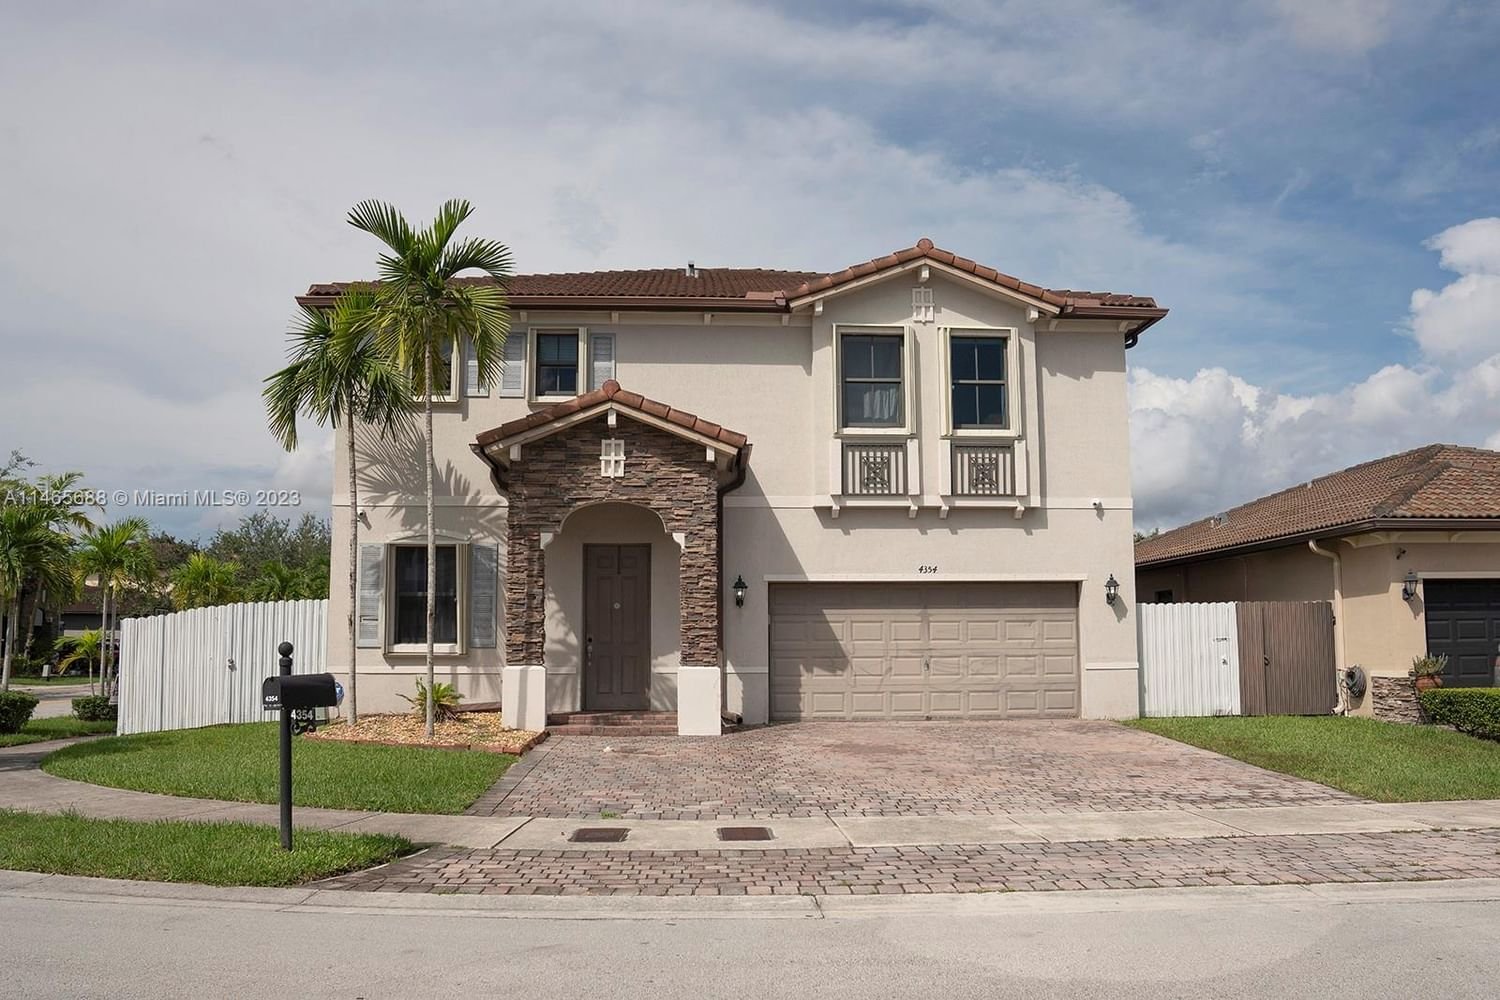 Real estate property located at 4354 165th Ct, Miami-Dade County, Miami, FL